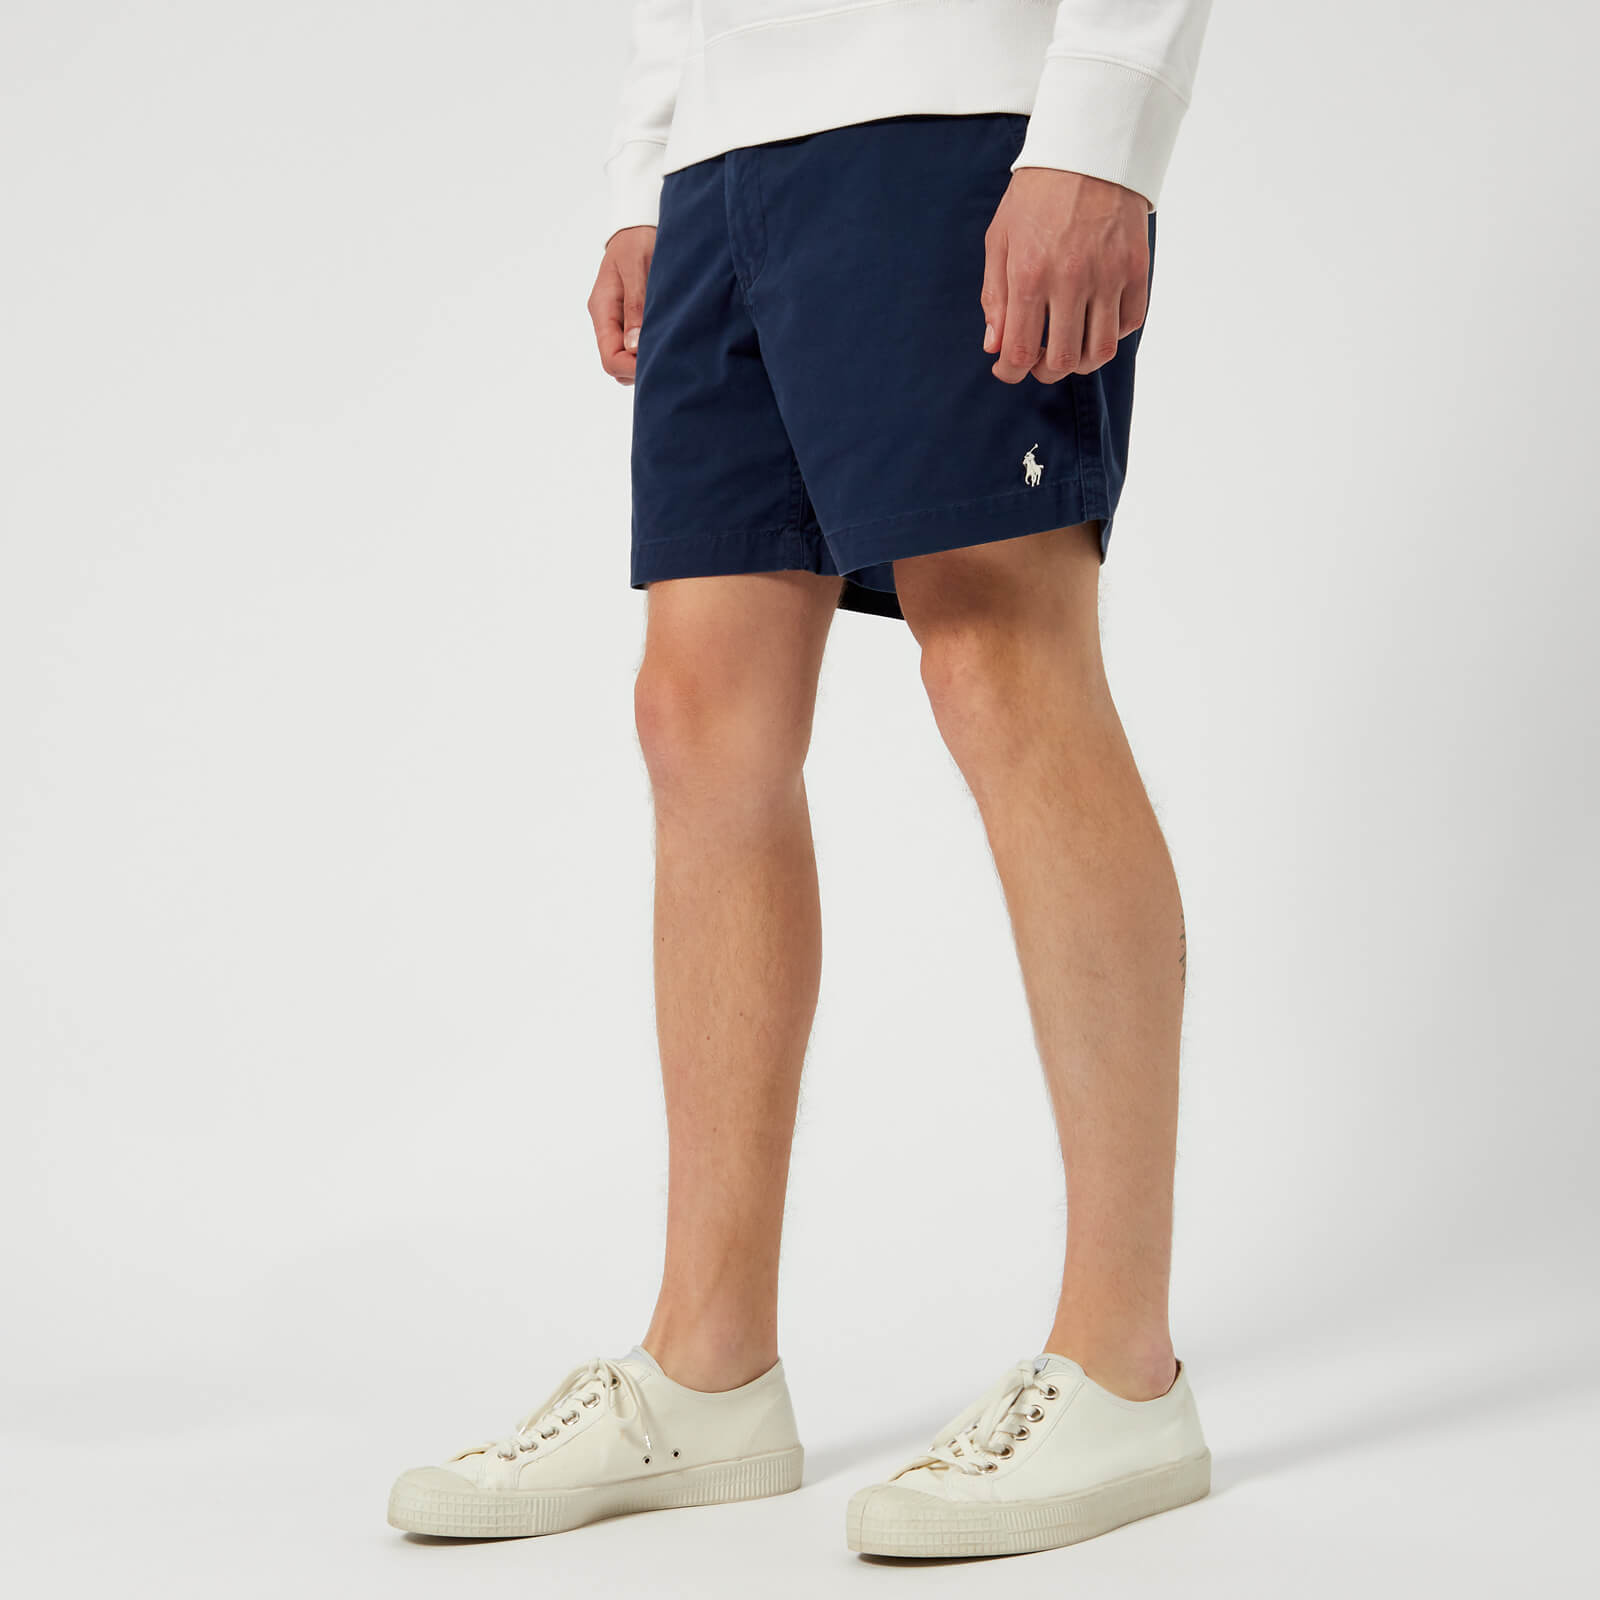 ralph lauren navy shorts